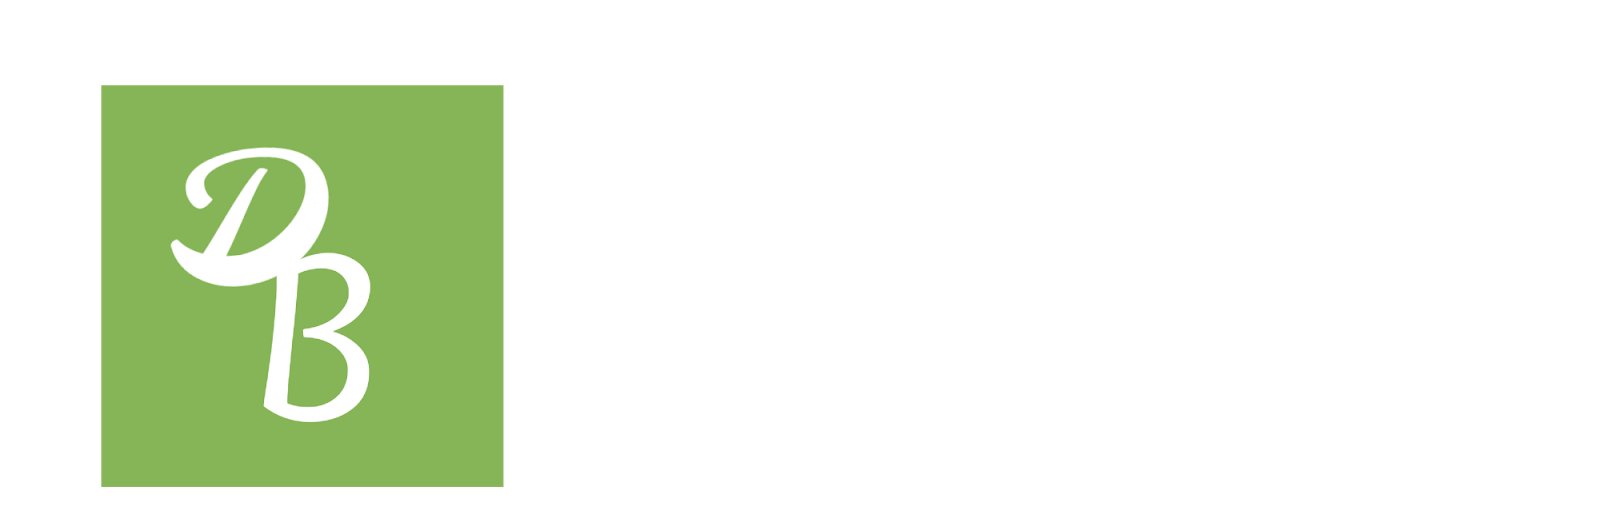 Digital Blog | Free Service of Digital World